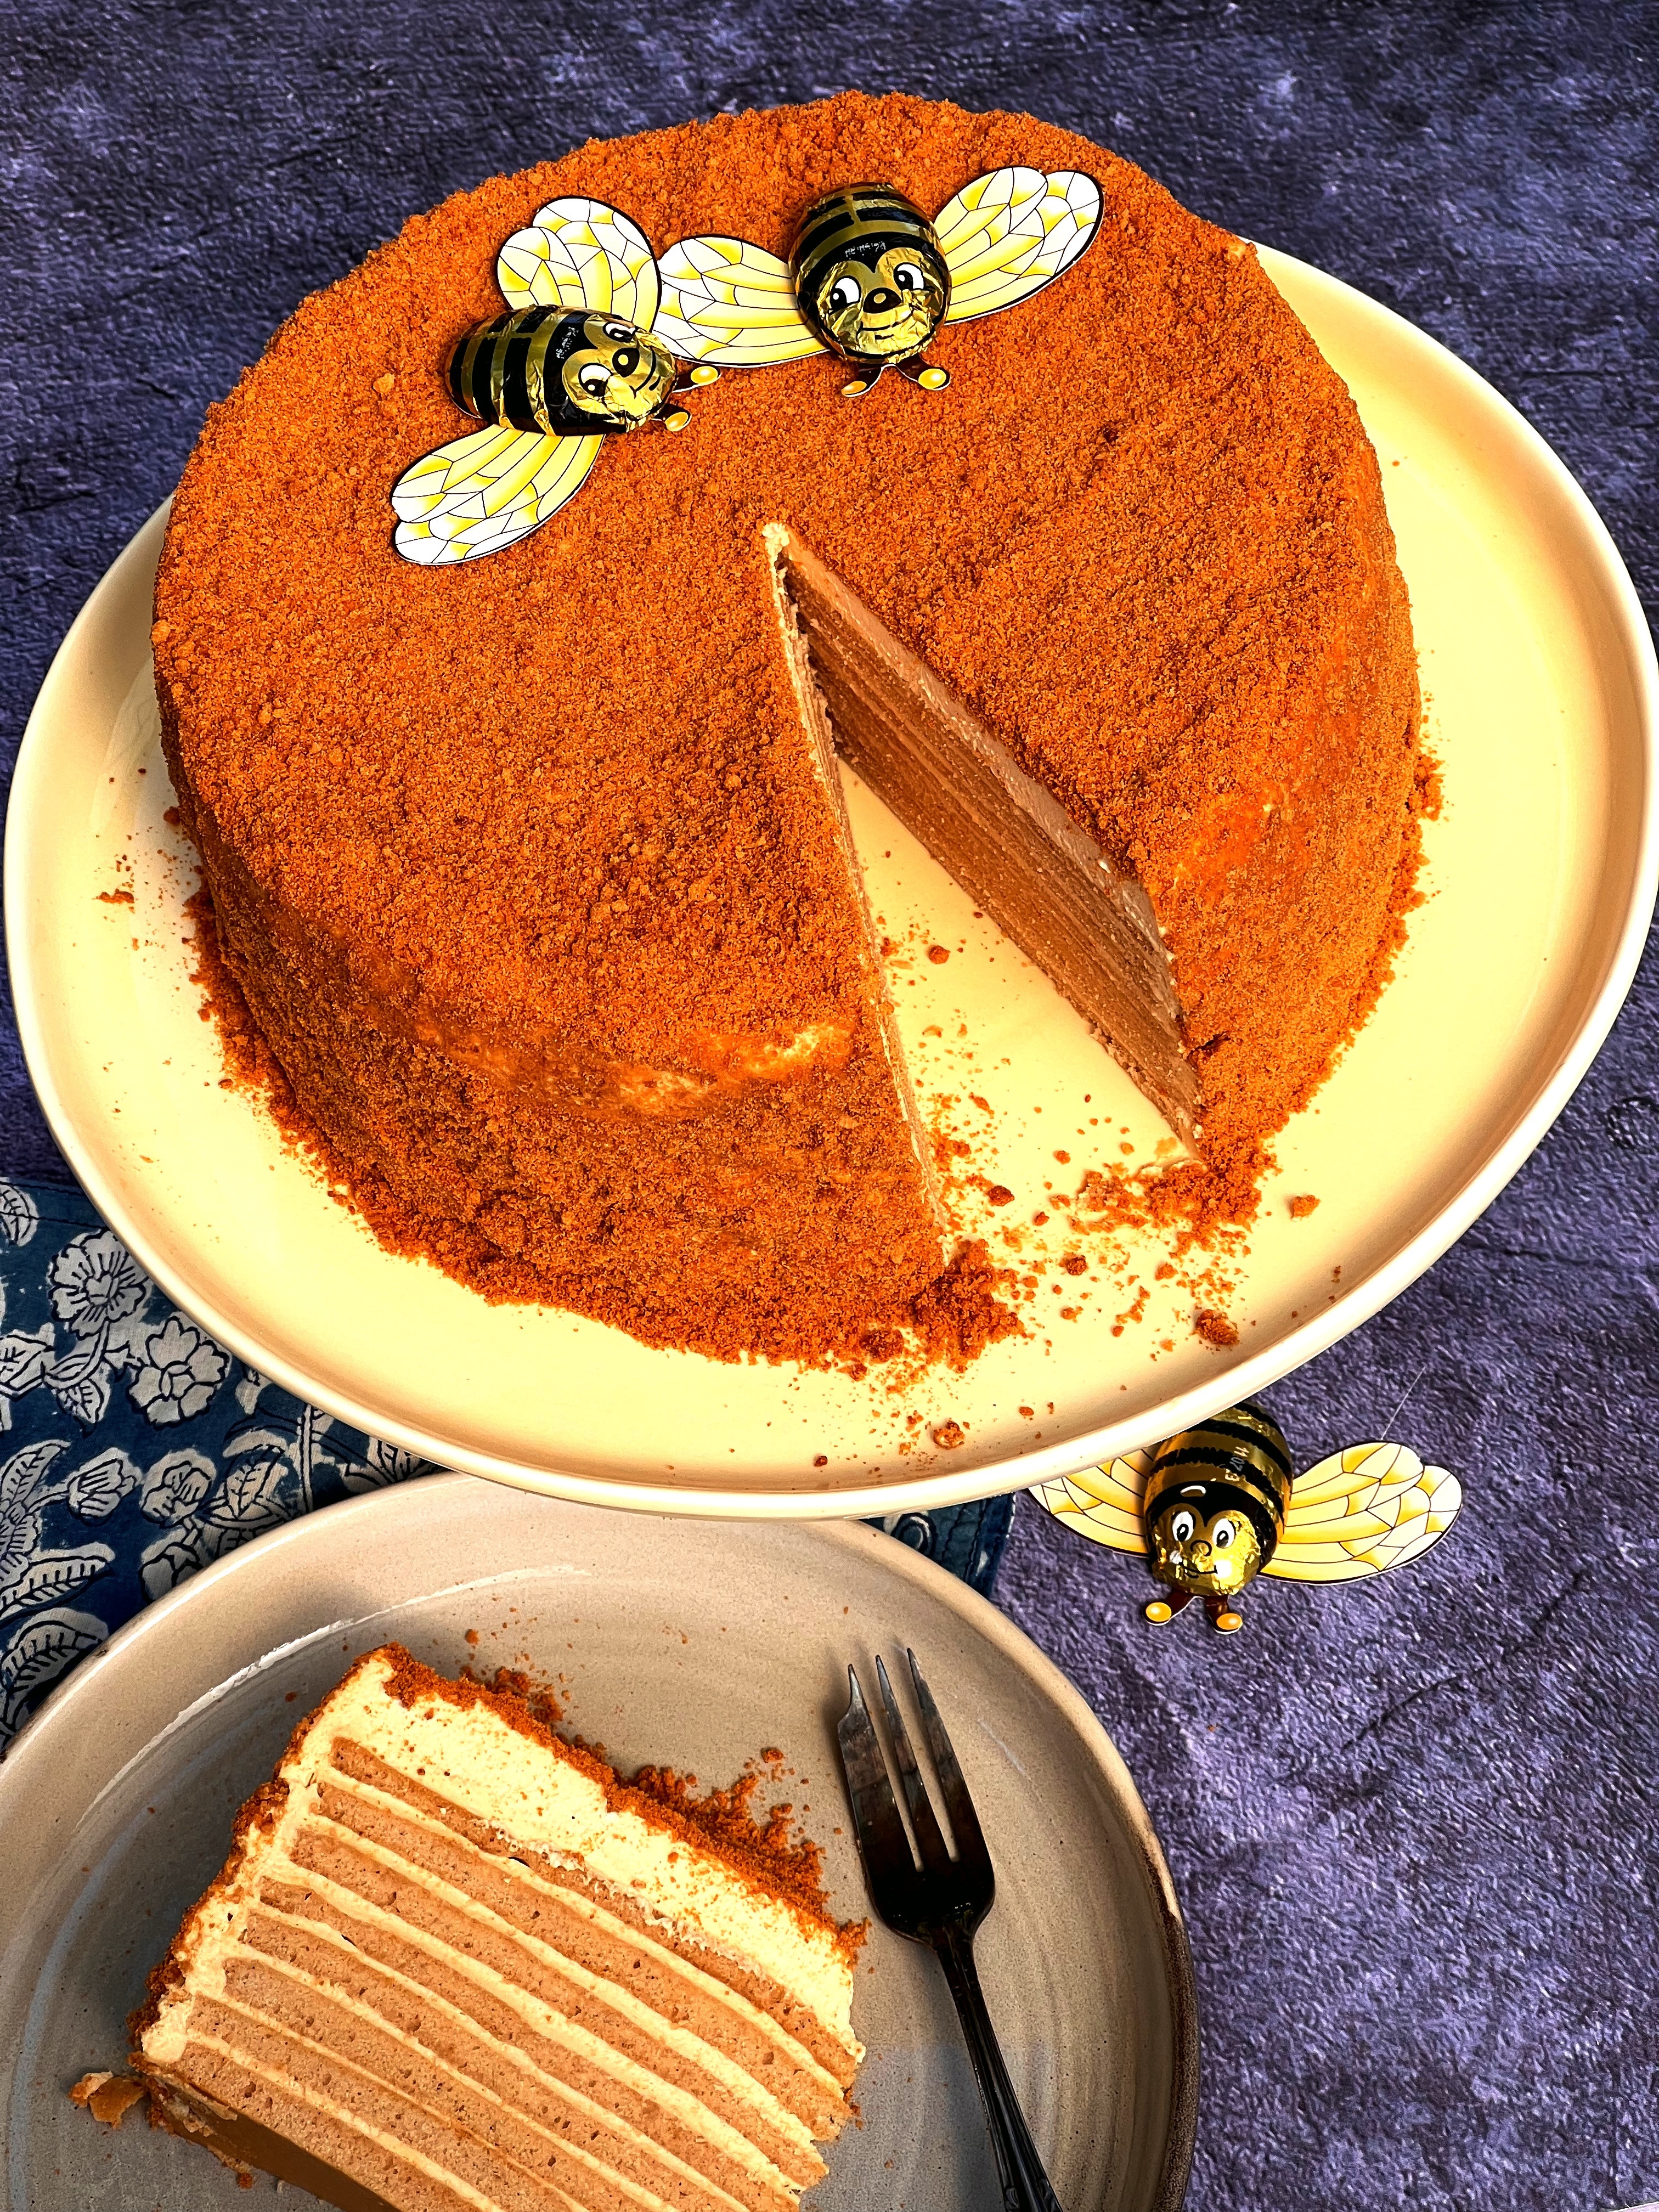 Best Honey Cake Recipe - How To Make Honey Cake